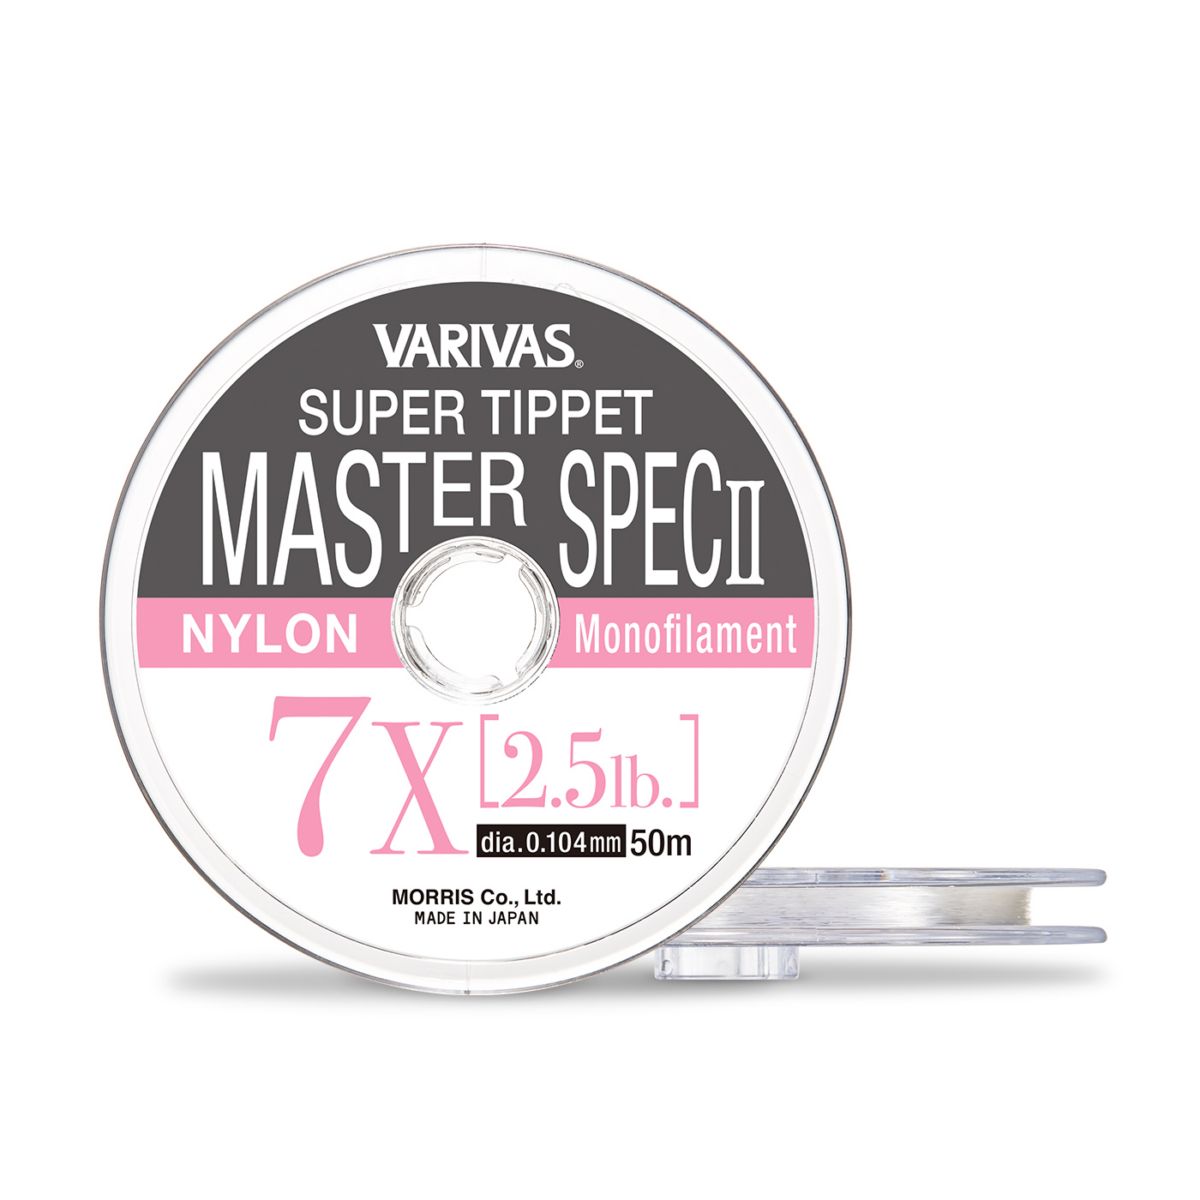 VARIVAS MASTER SPEC II SUPER TIPPET NYLON